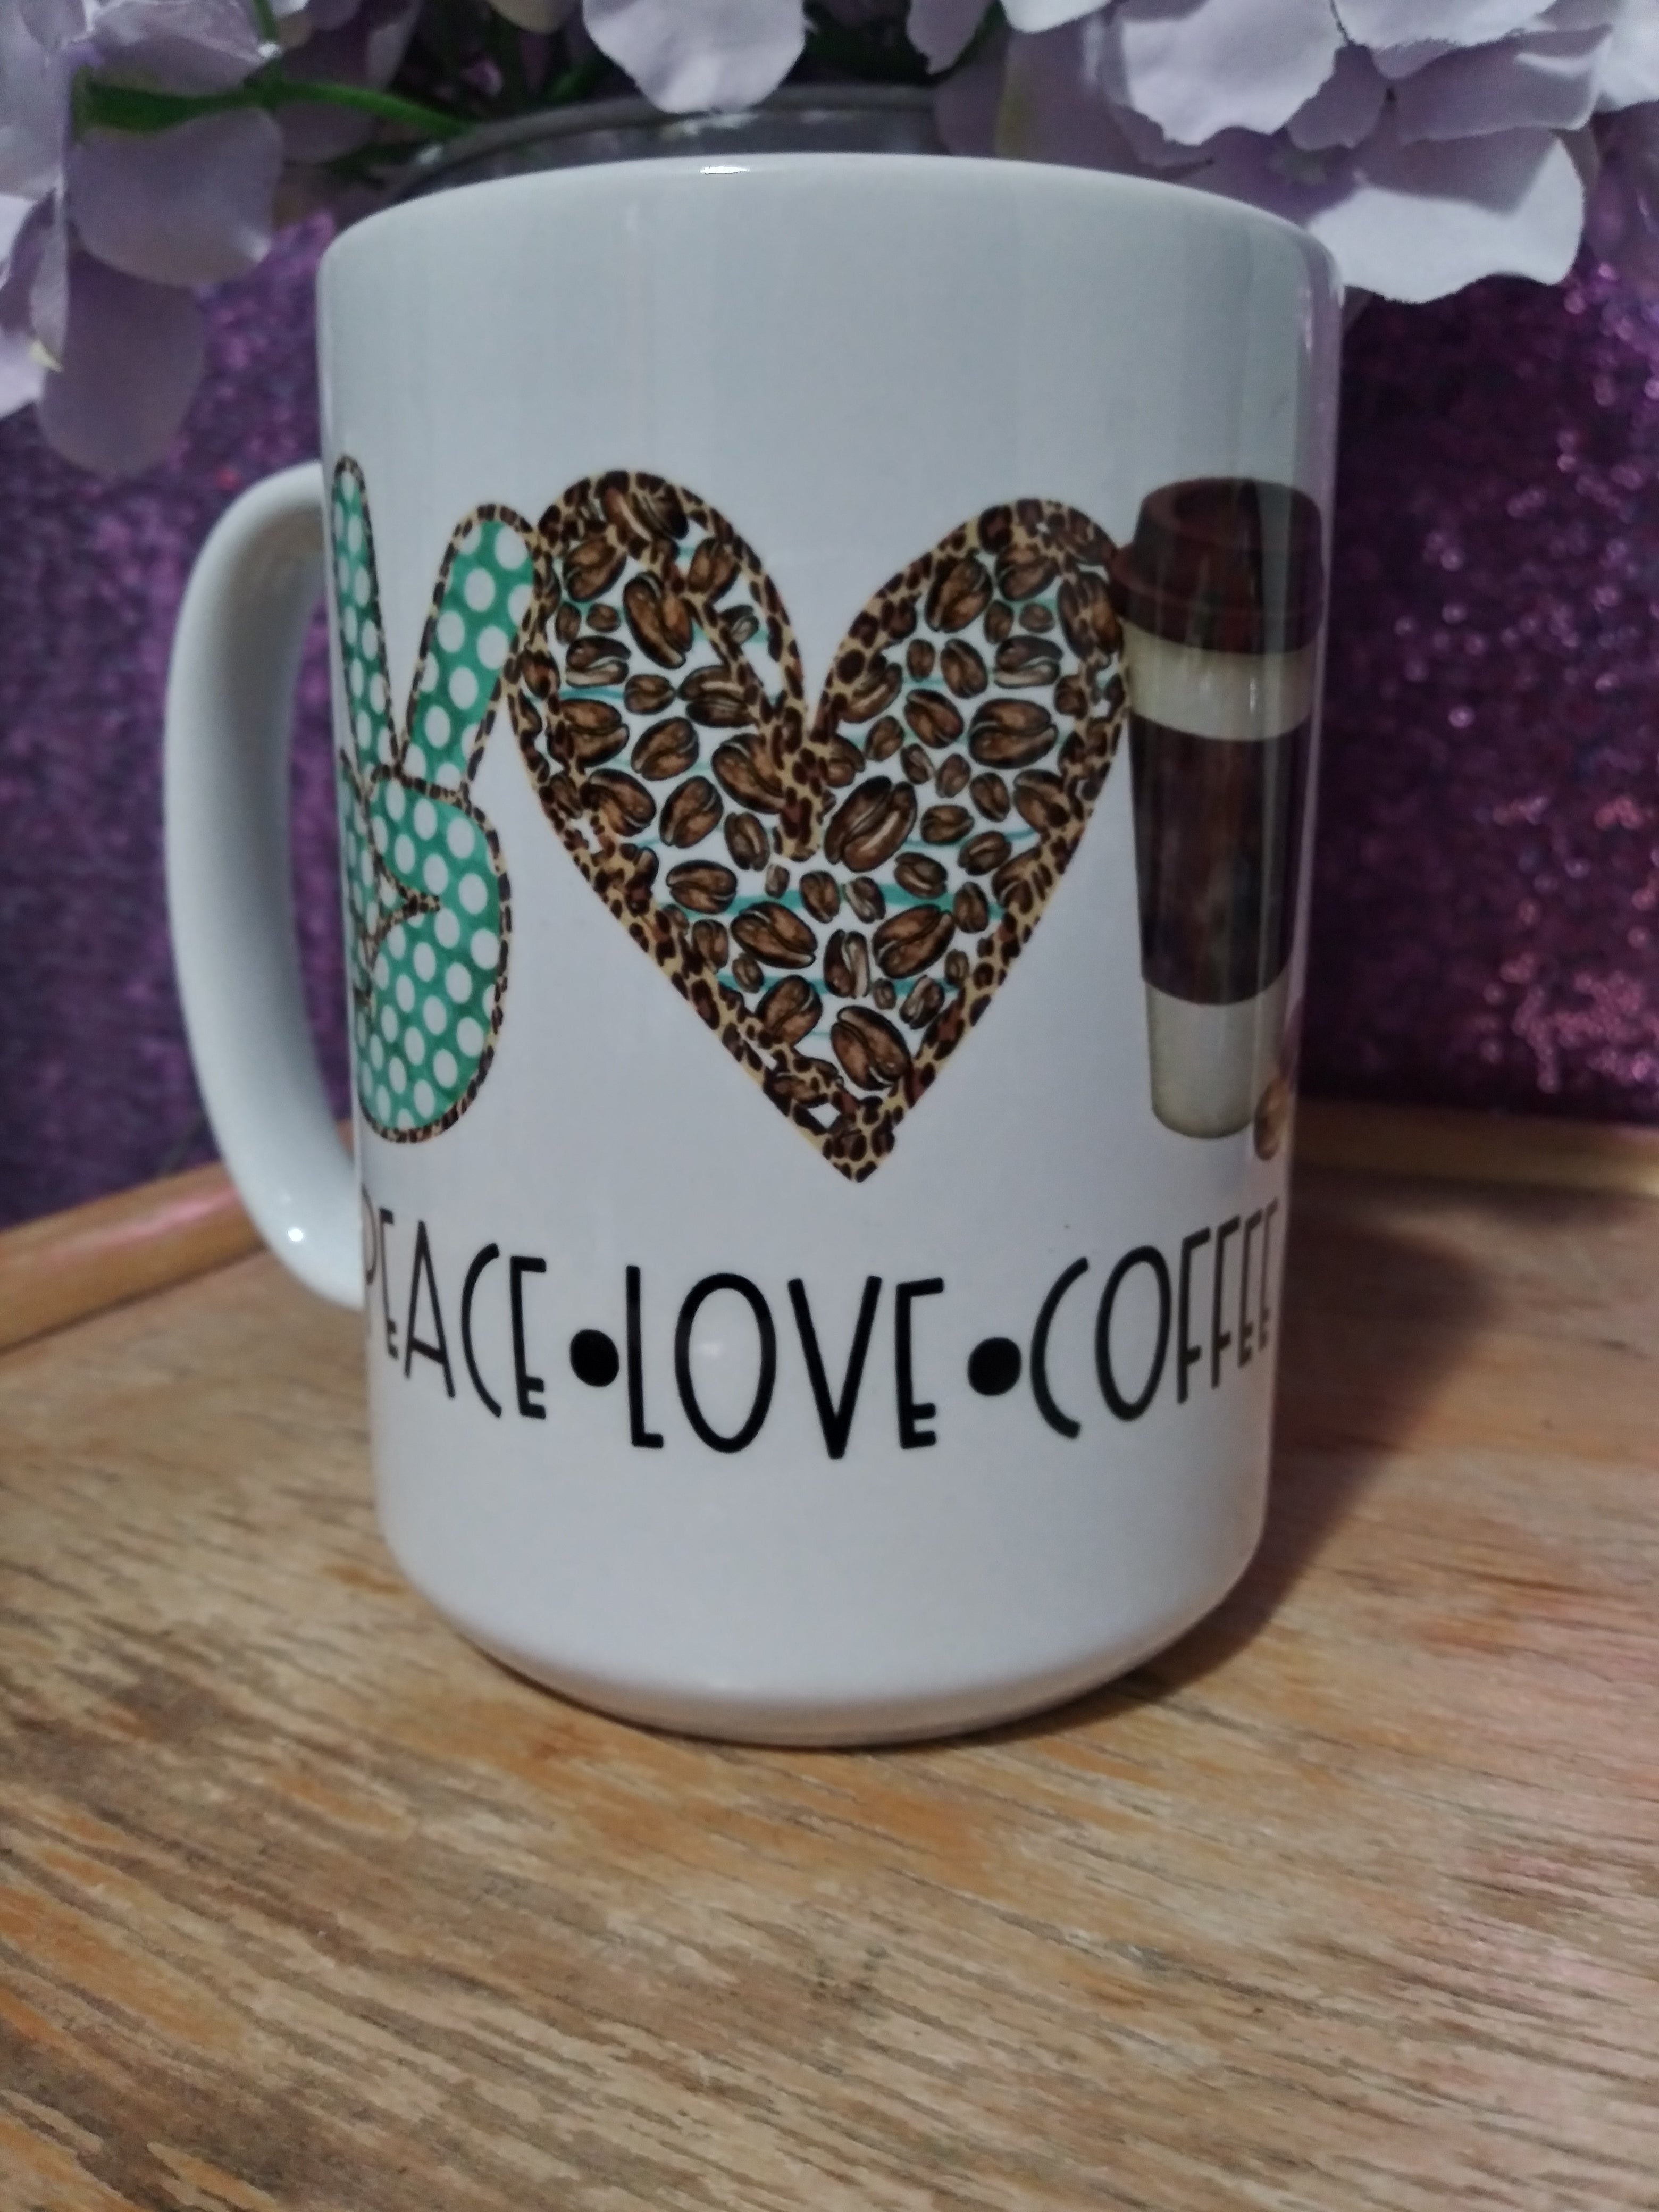 Peace love and coffee mug